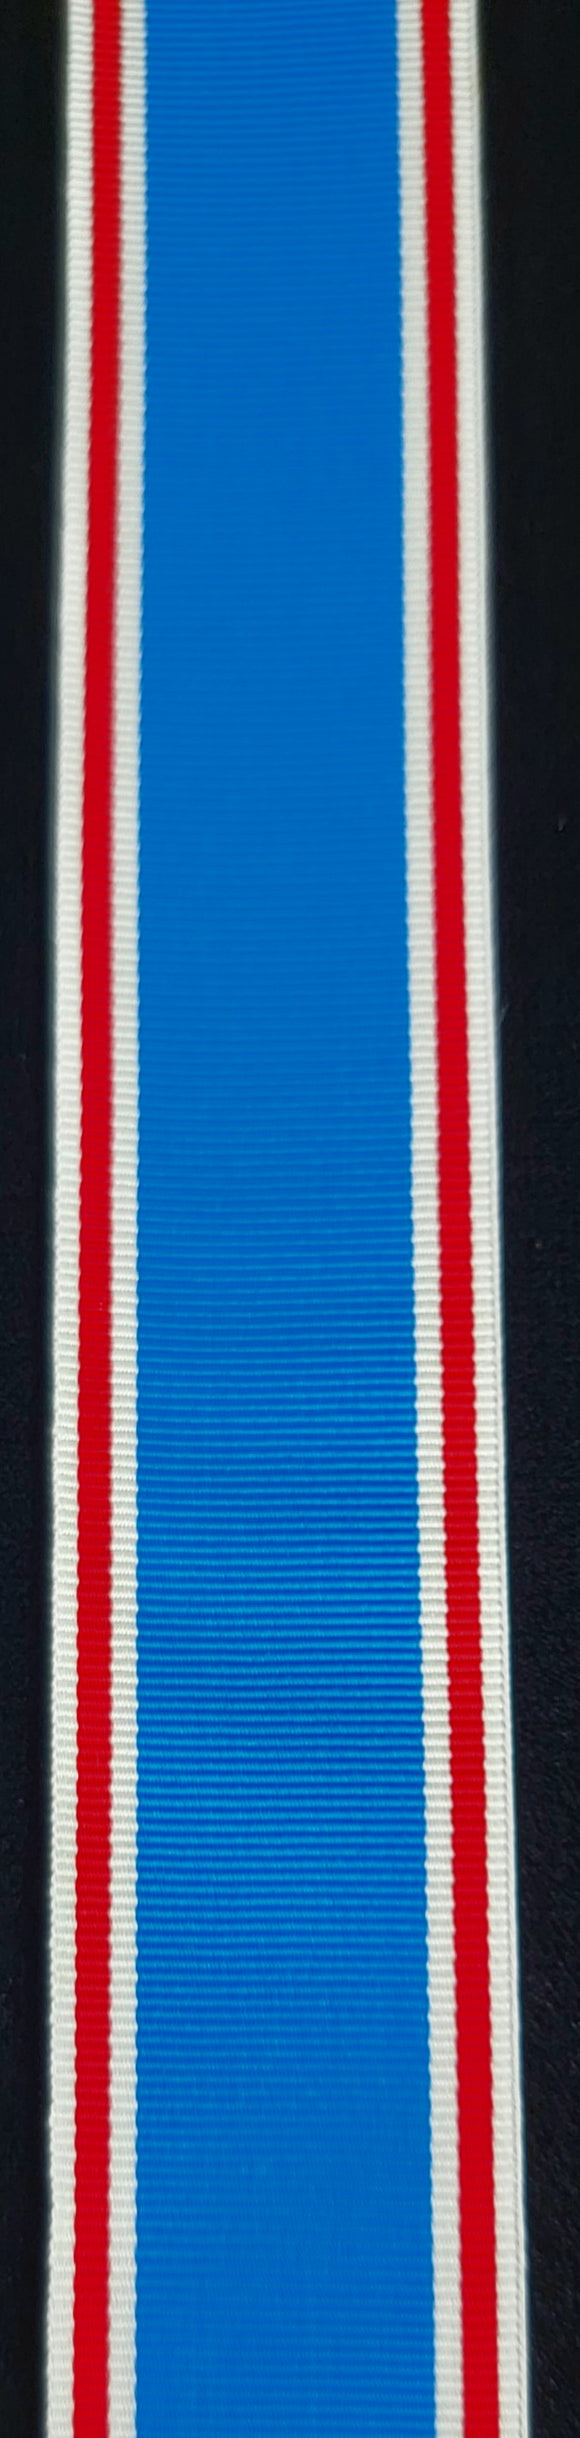 Ribbon, King George VI Coronation Medal 1937